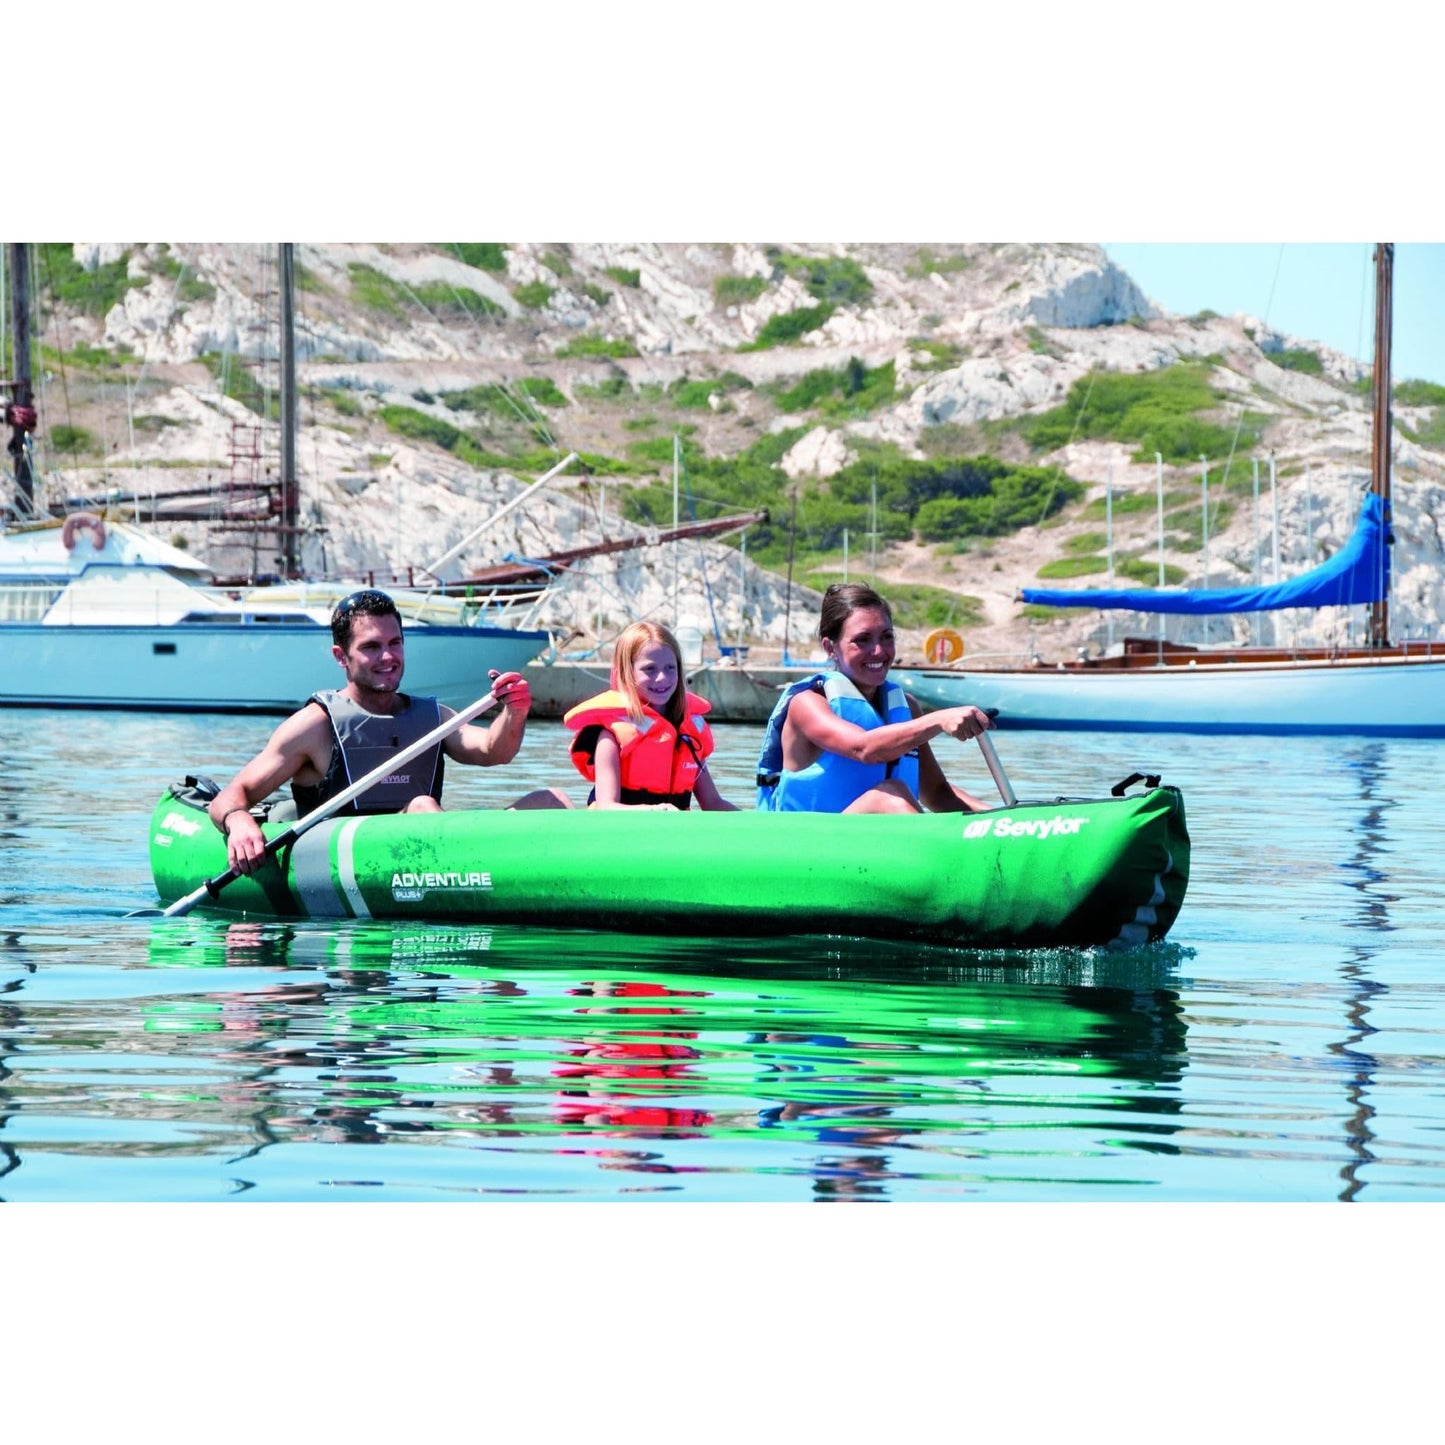 Sevylor Adventure Plus 2+1 Inflatable Kayak